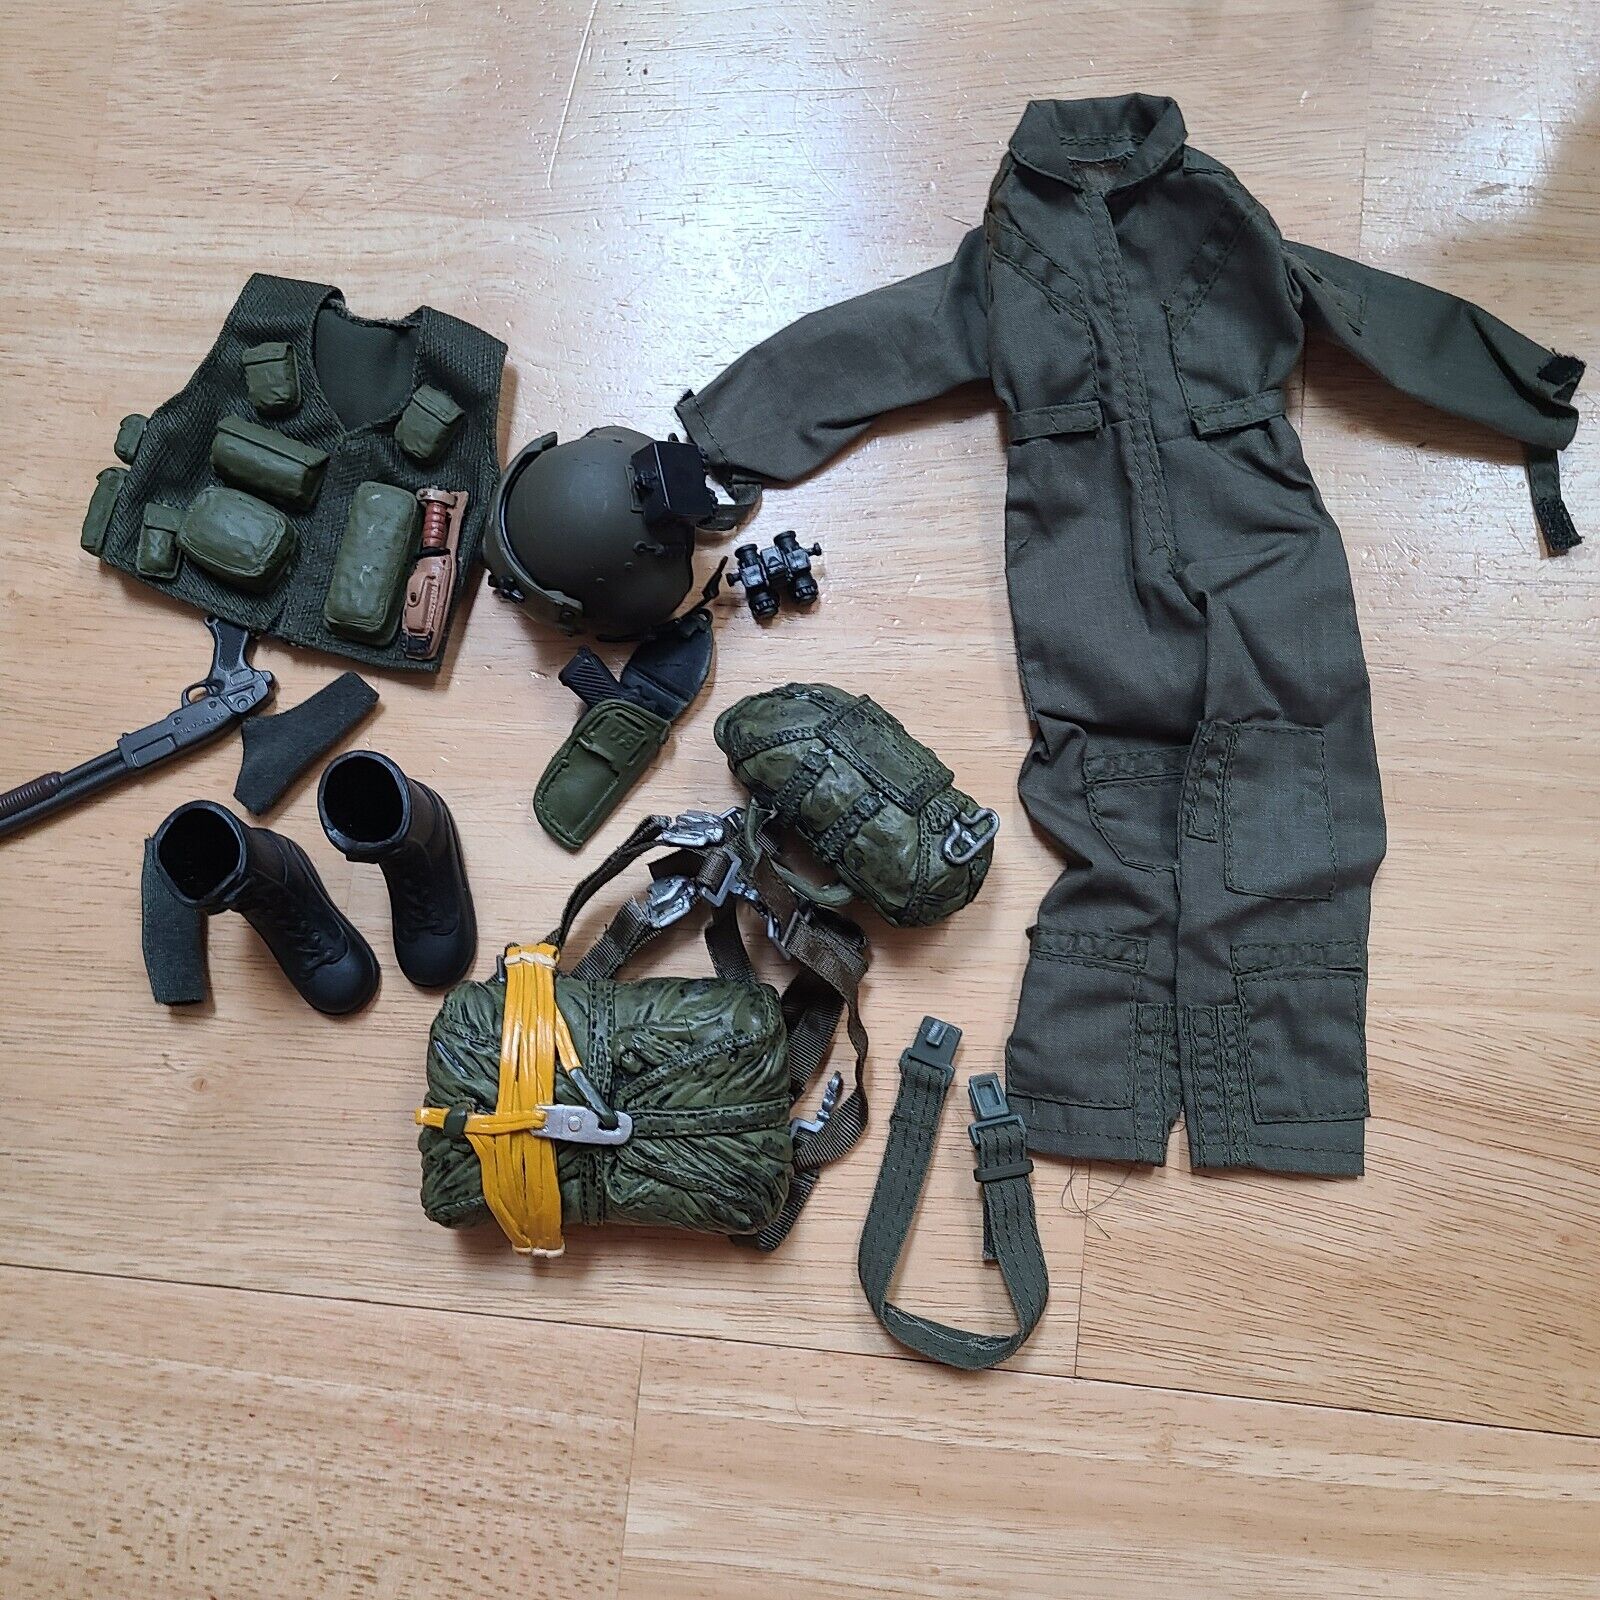 Ultimate soldier 21st century toys HALO Jumper 1/6 scale uniform lot 